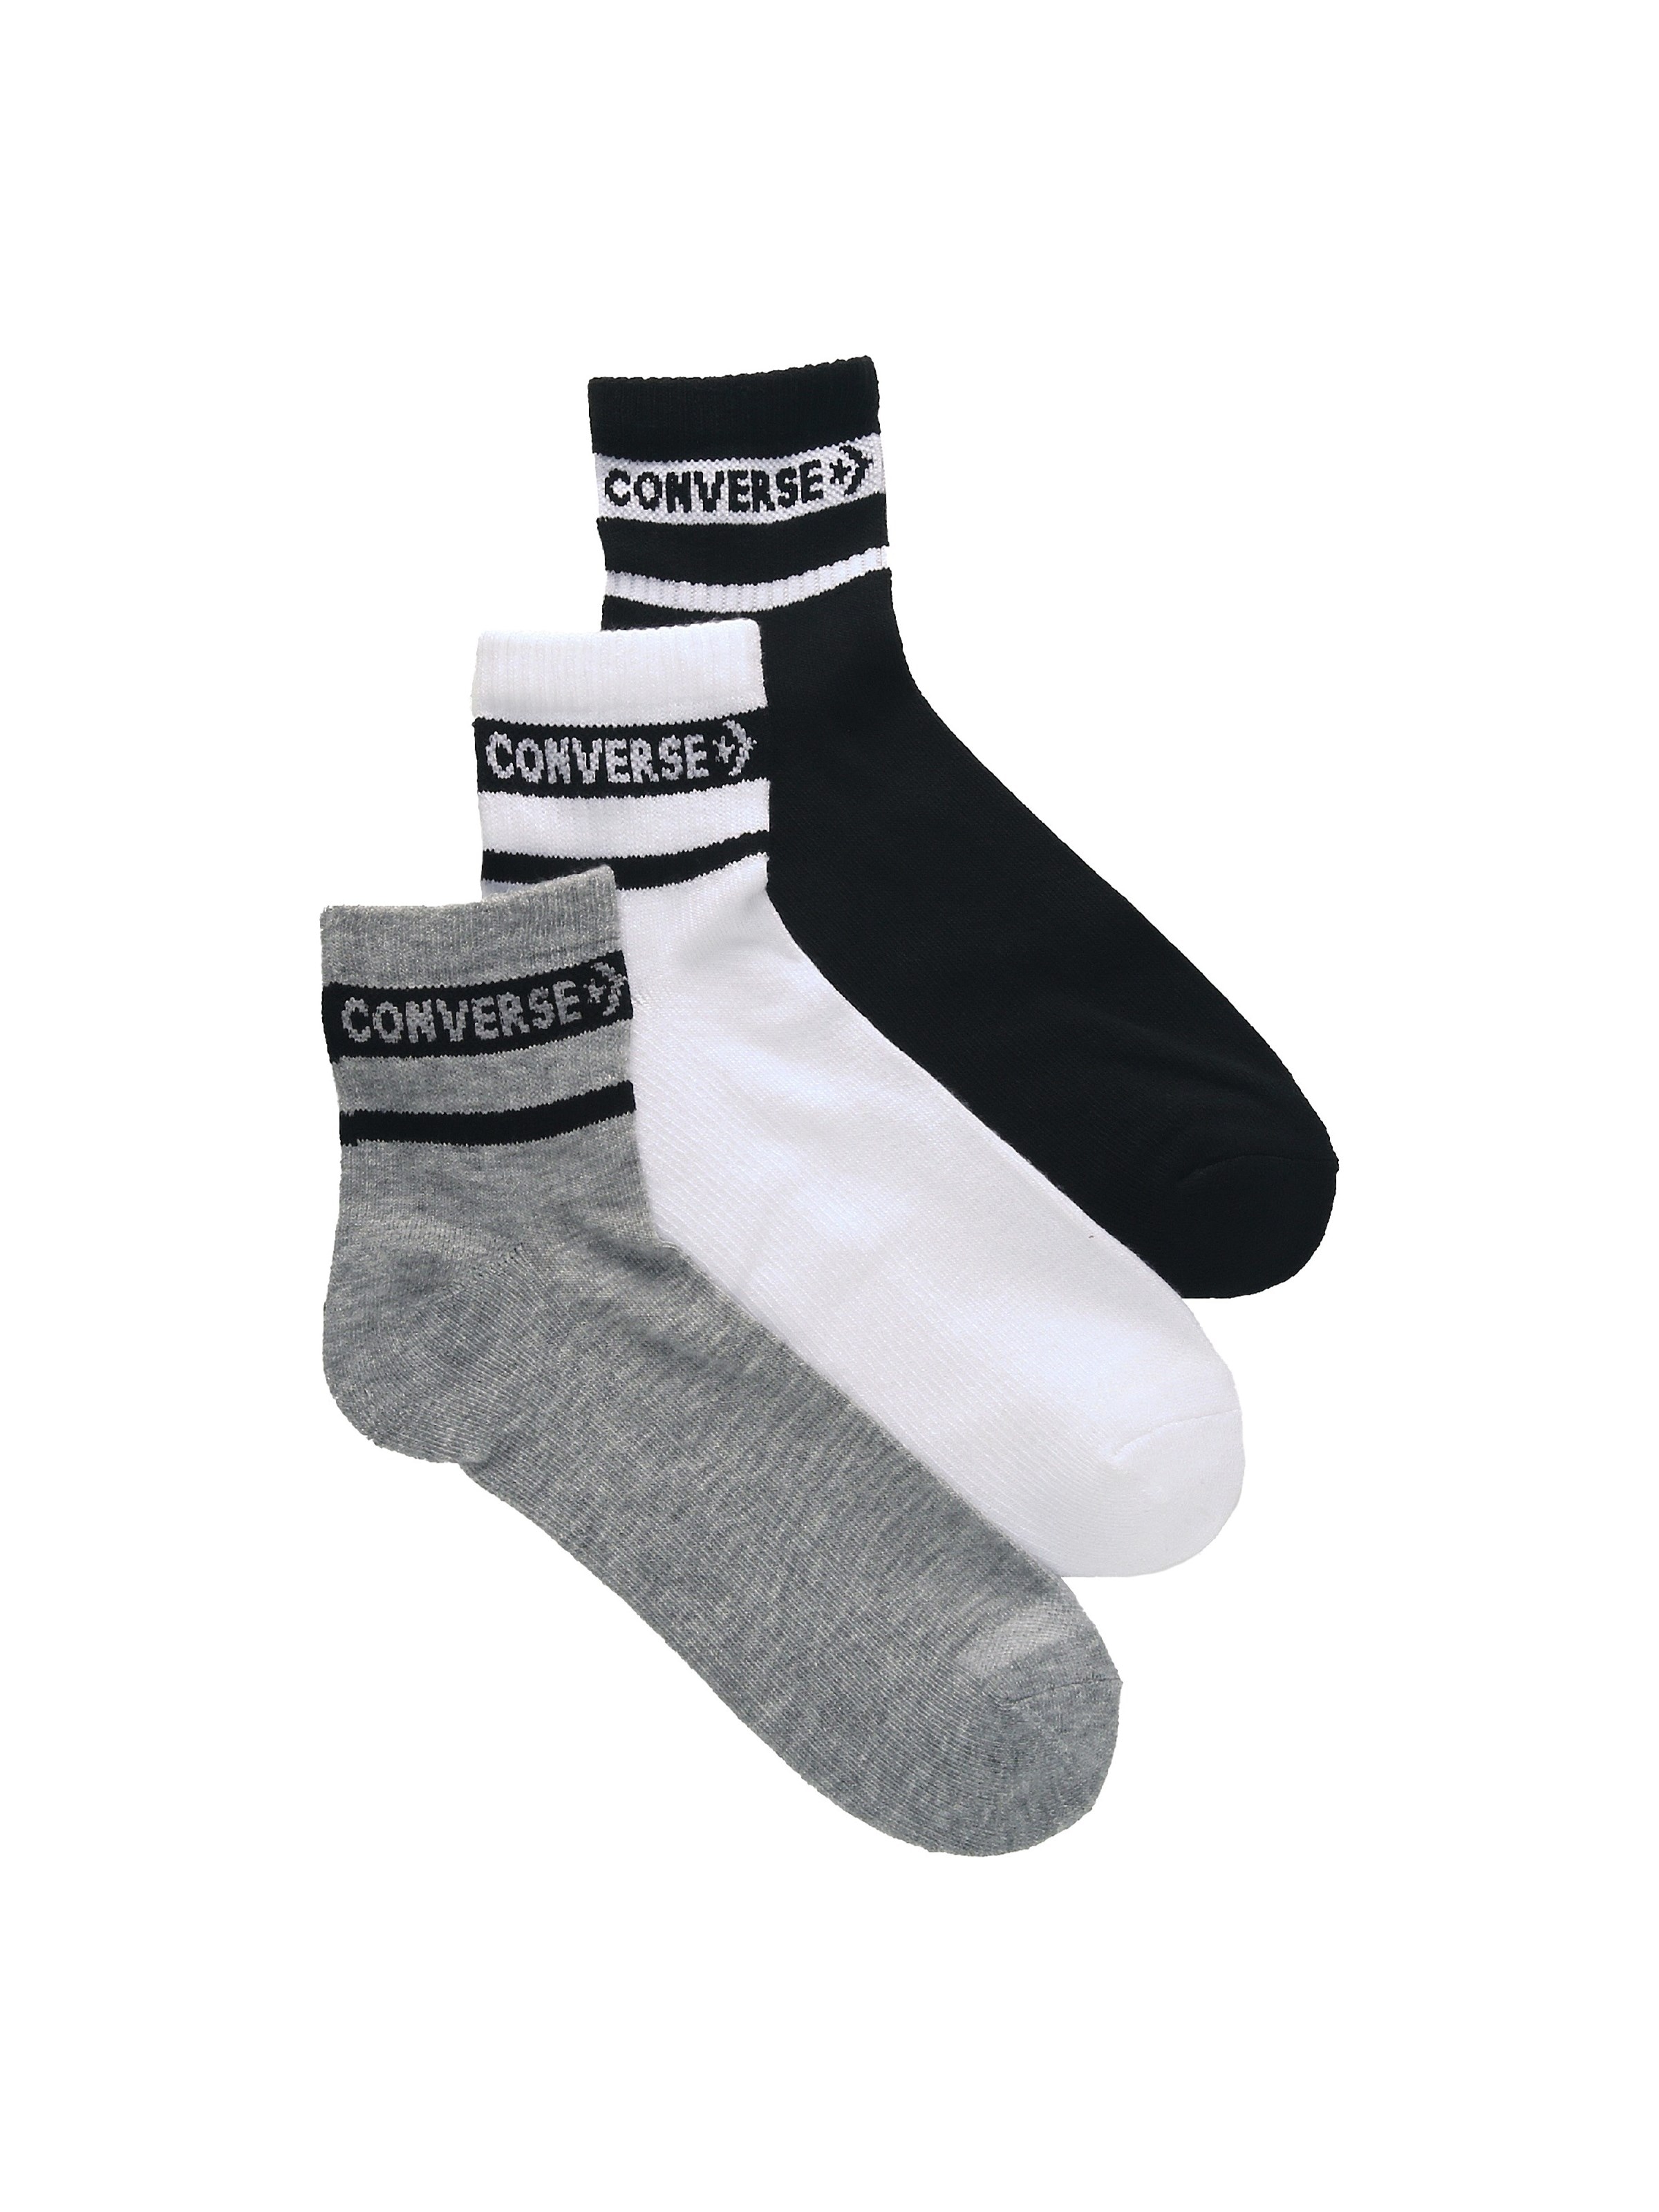 Converse Men's Pack Quarter Socks Famous